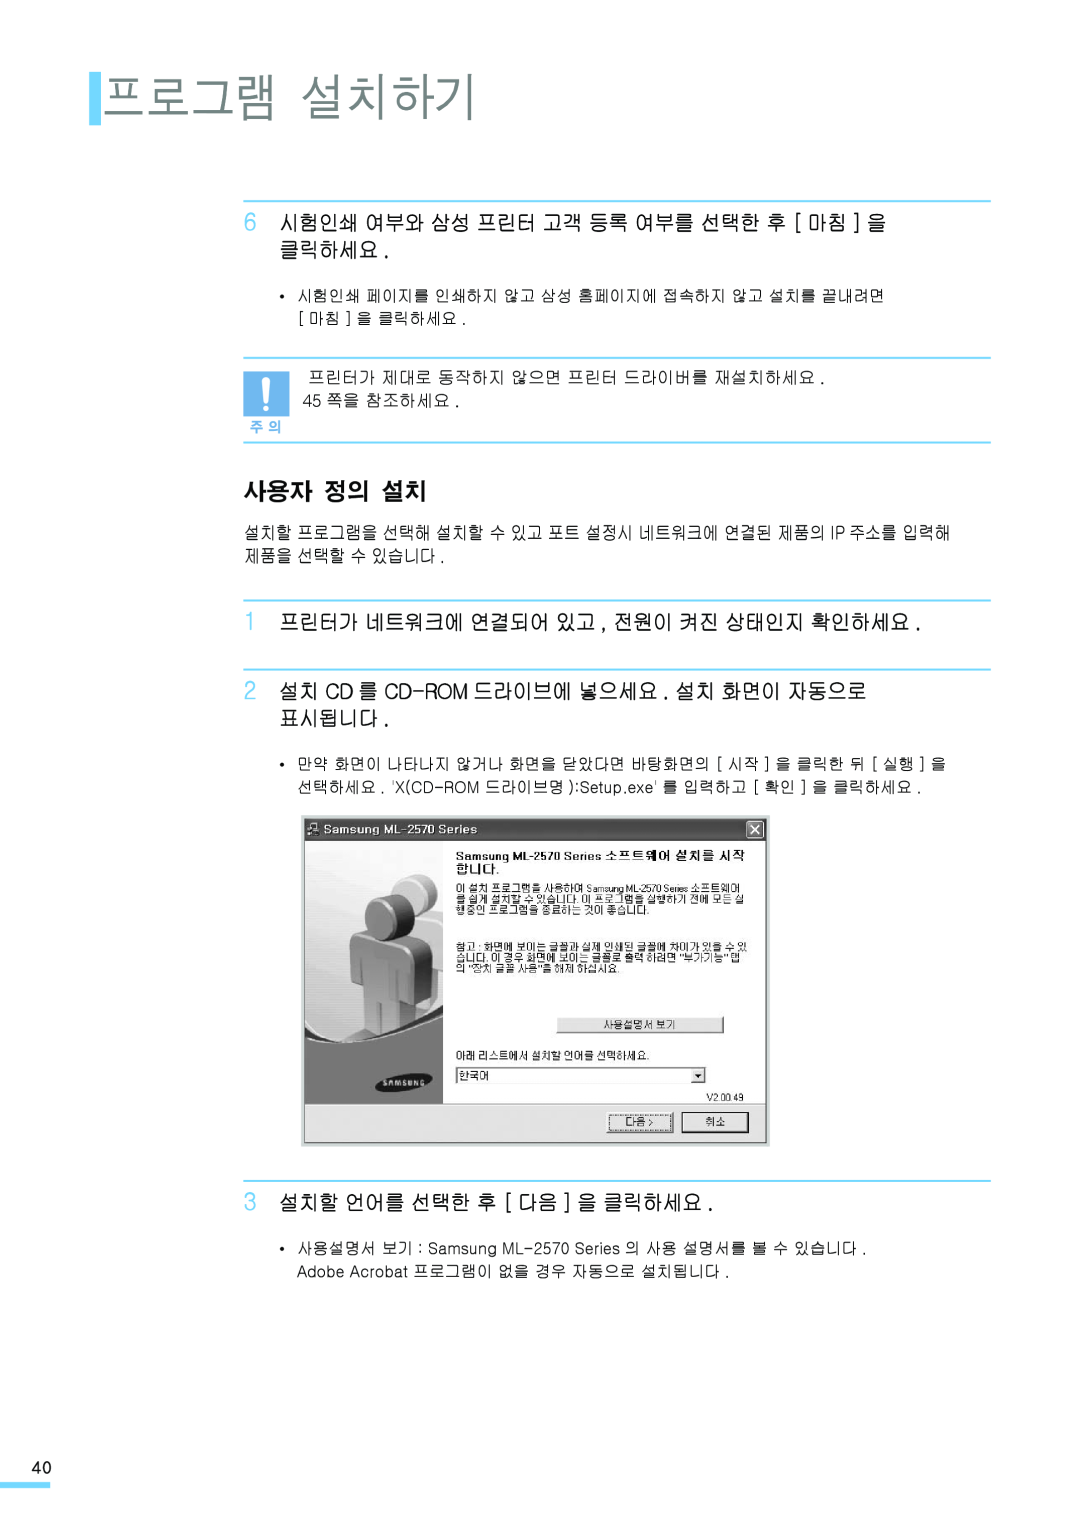 Samsung ML-2571N manual 프로그램 설치하기, 6 시험인쇄 여부와 삼성 프린터 고객 등록 여부를 선택한 후 마침 을 클릭하세요, 1 프린터가 네트워크에 연결되어 있고 , 전원이 켜진 상태인지 확인하세요 